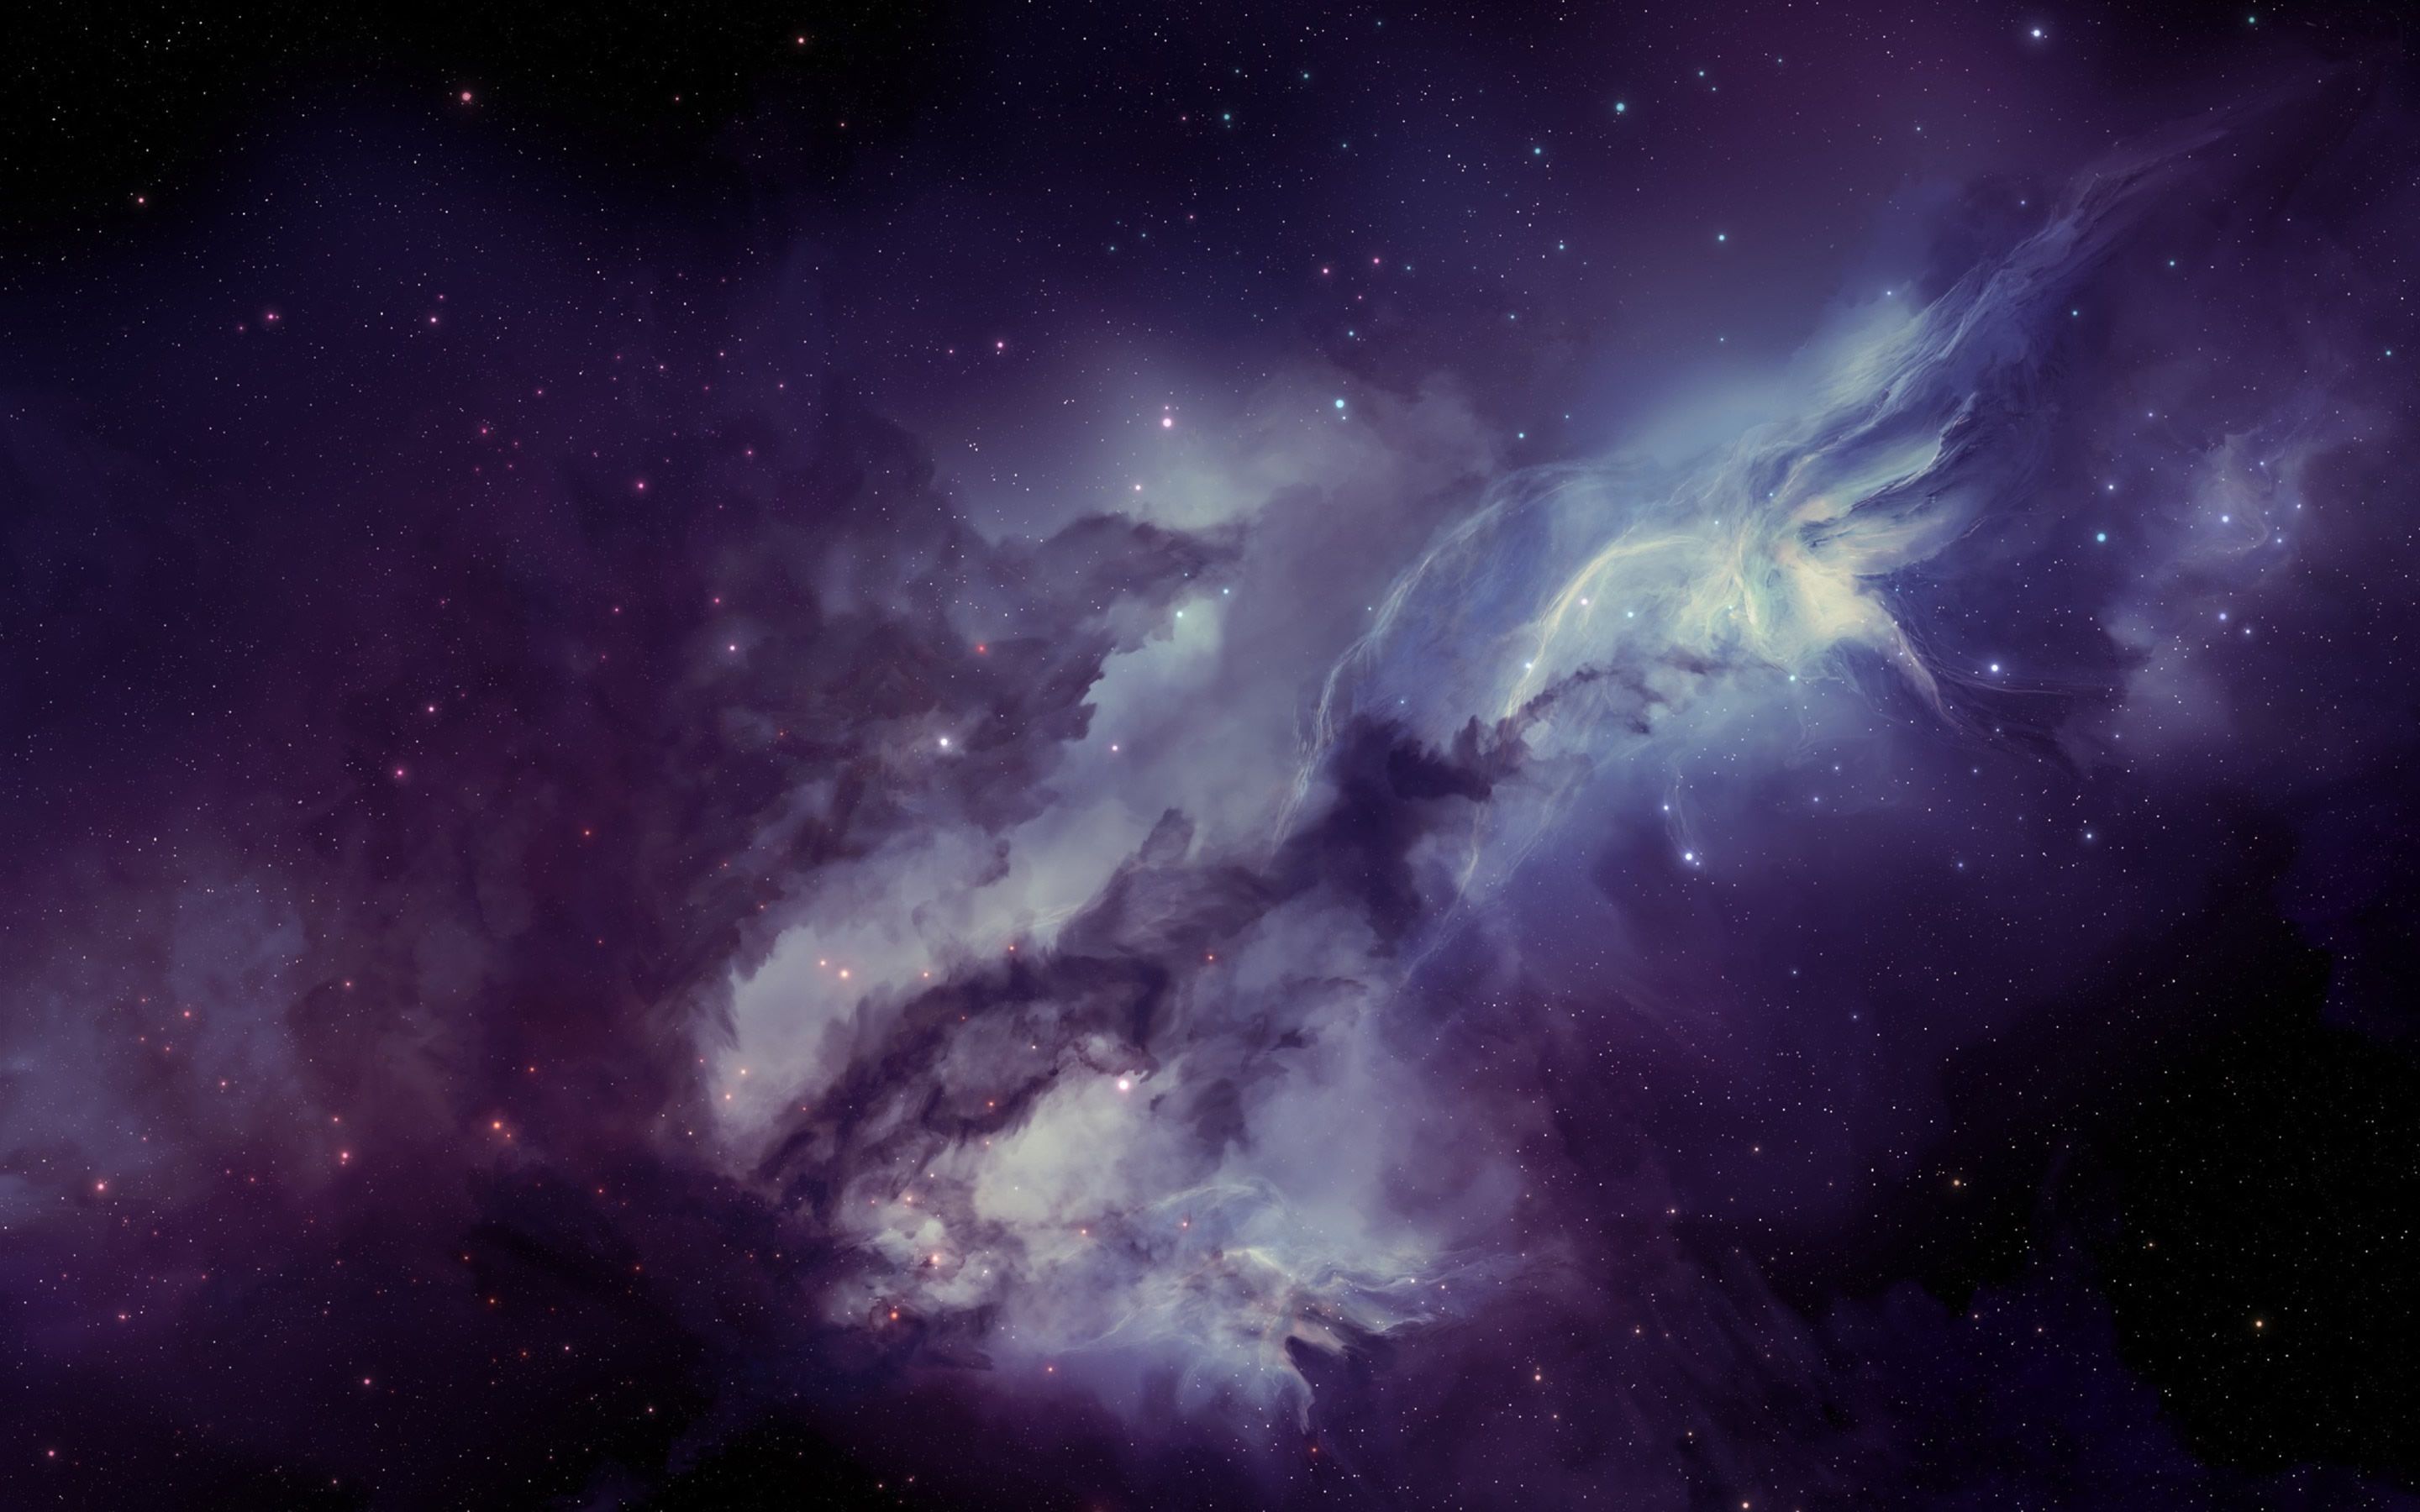 IMAGE interstellar wallpaper macbook